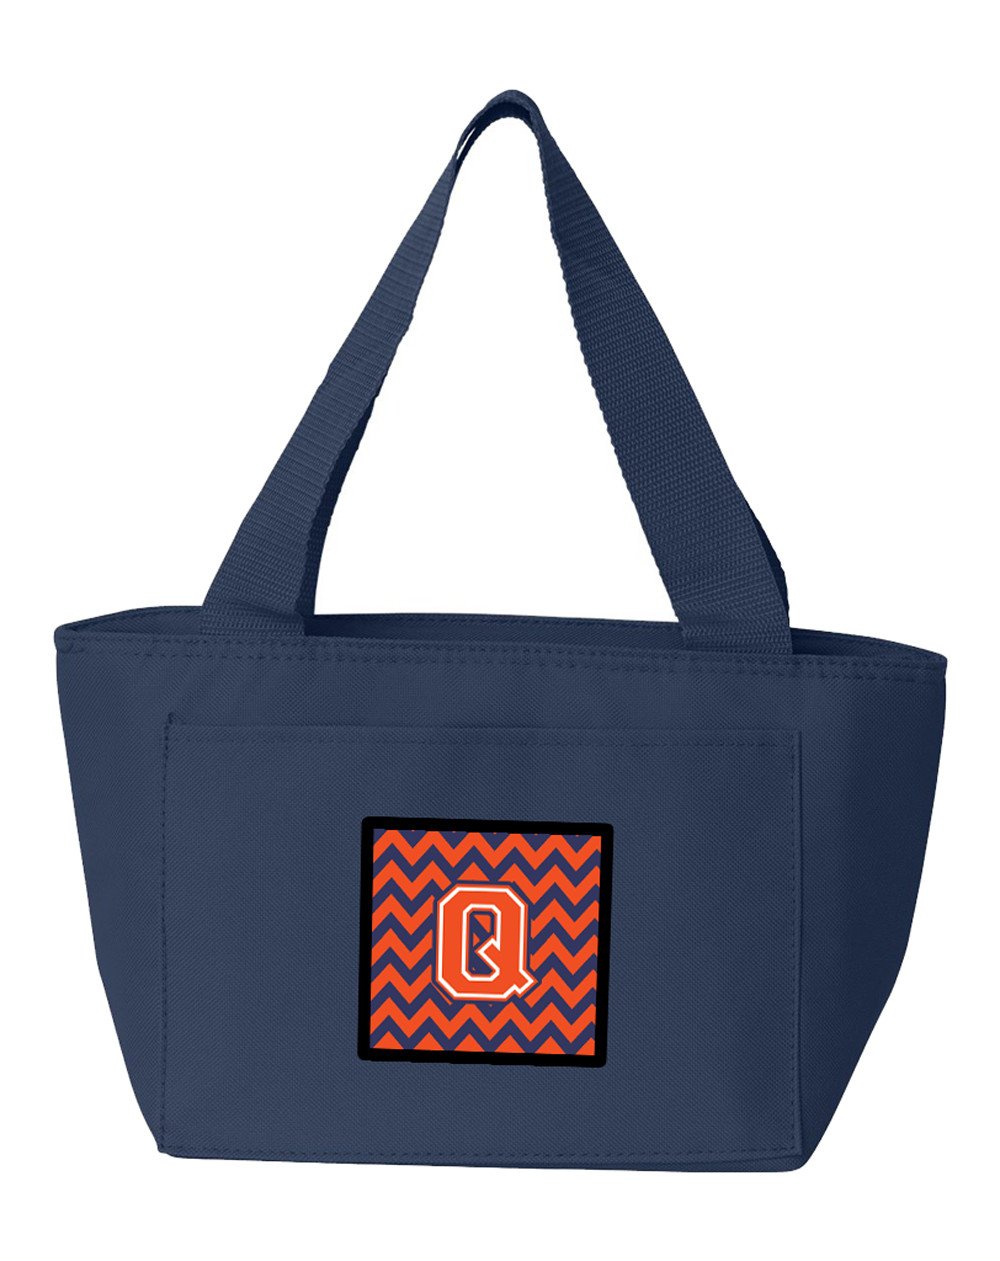 Letter Q Chevron Orange and Blue Lunch Bag CJ1042-QNA-8808 by Caroline's Treasures